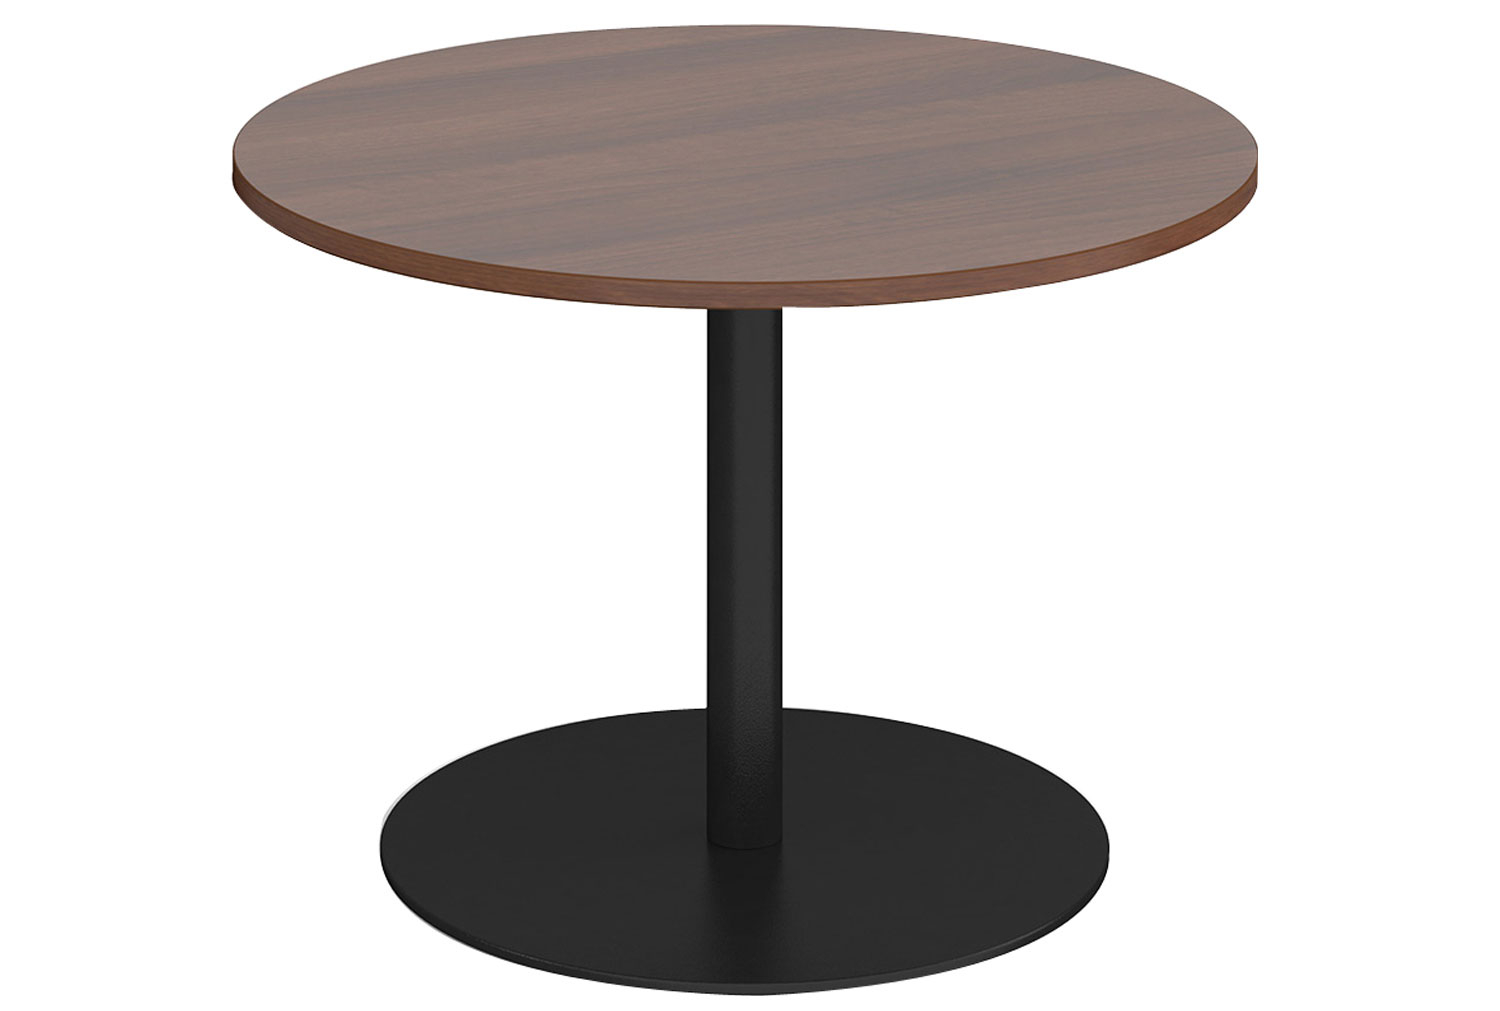 Tasso Round Boardroom Table, 100diax73h (cm), Walnut